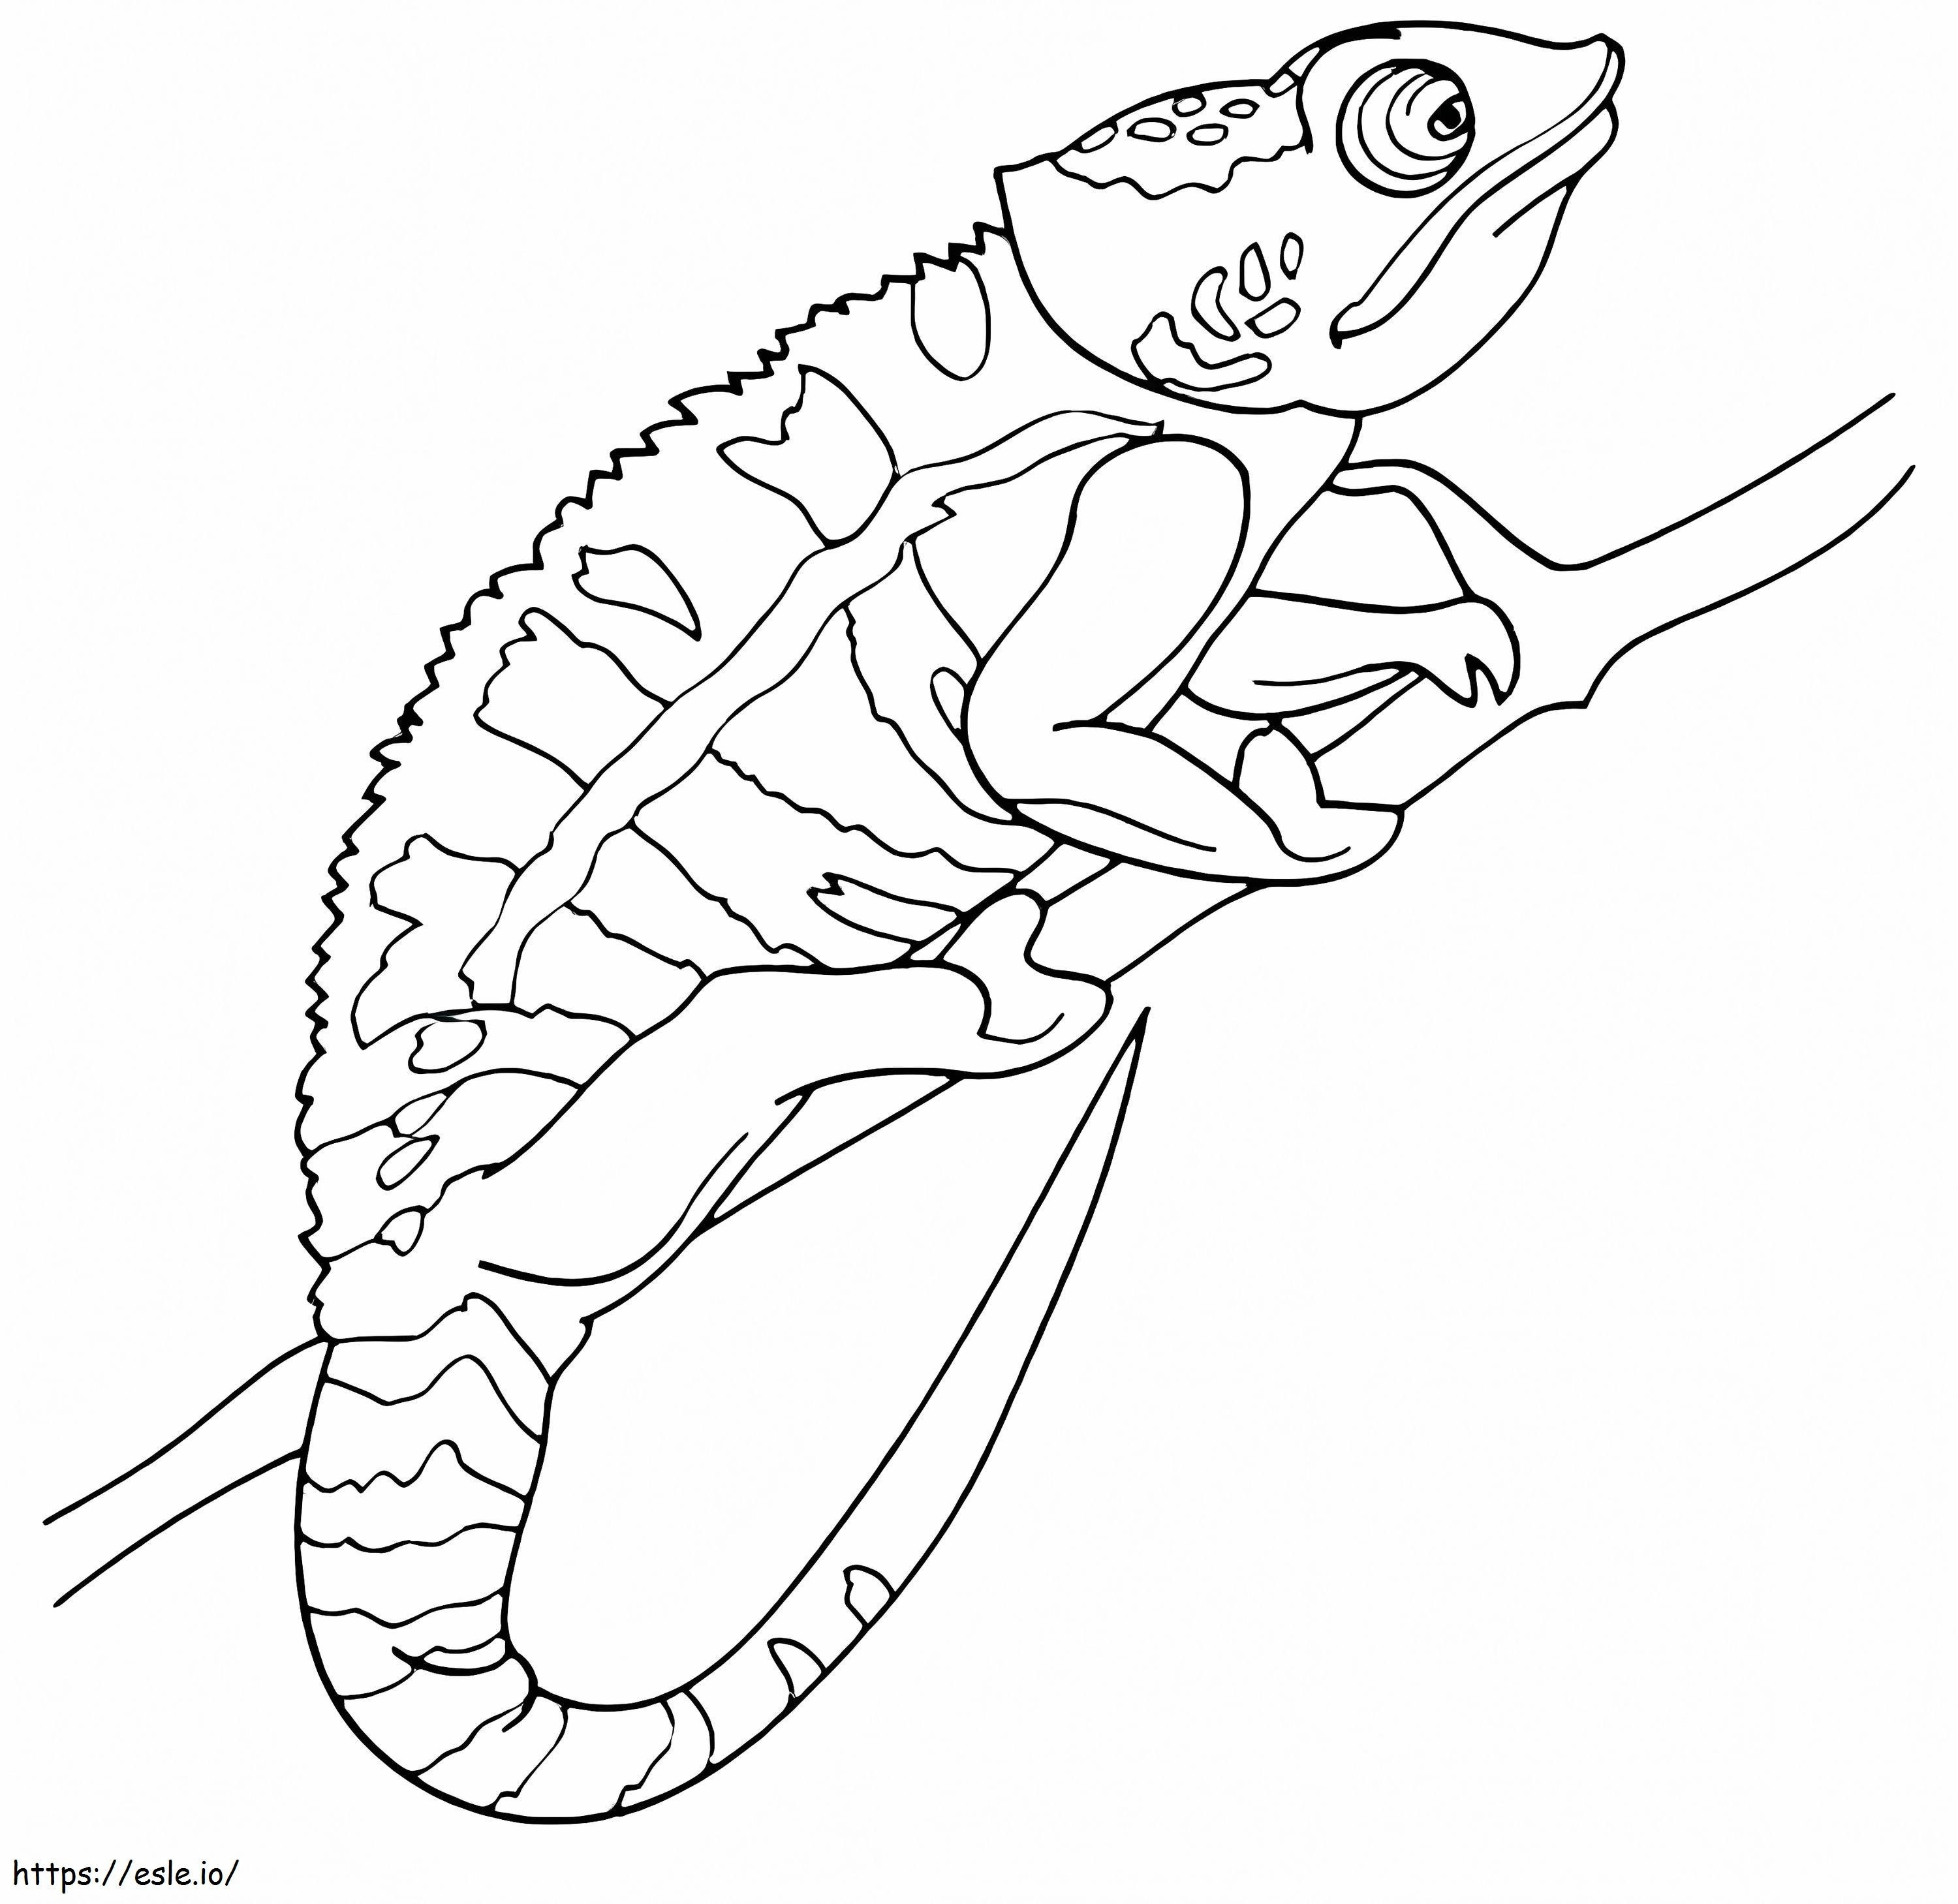 Basic Chameleon coloring page